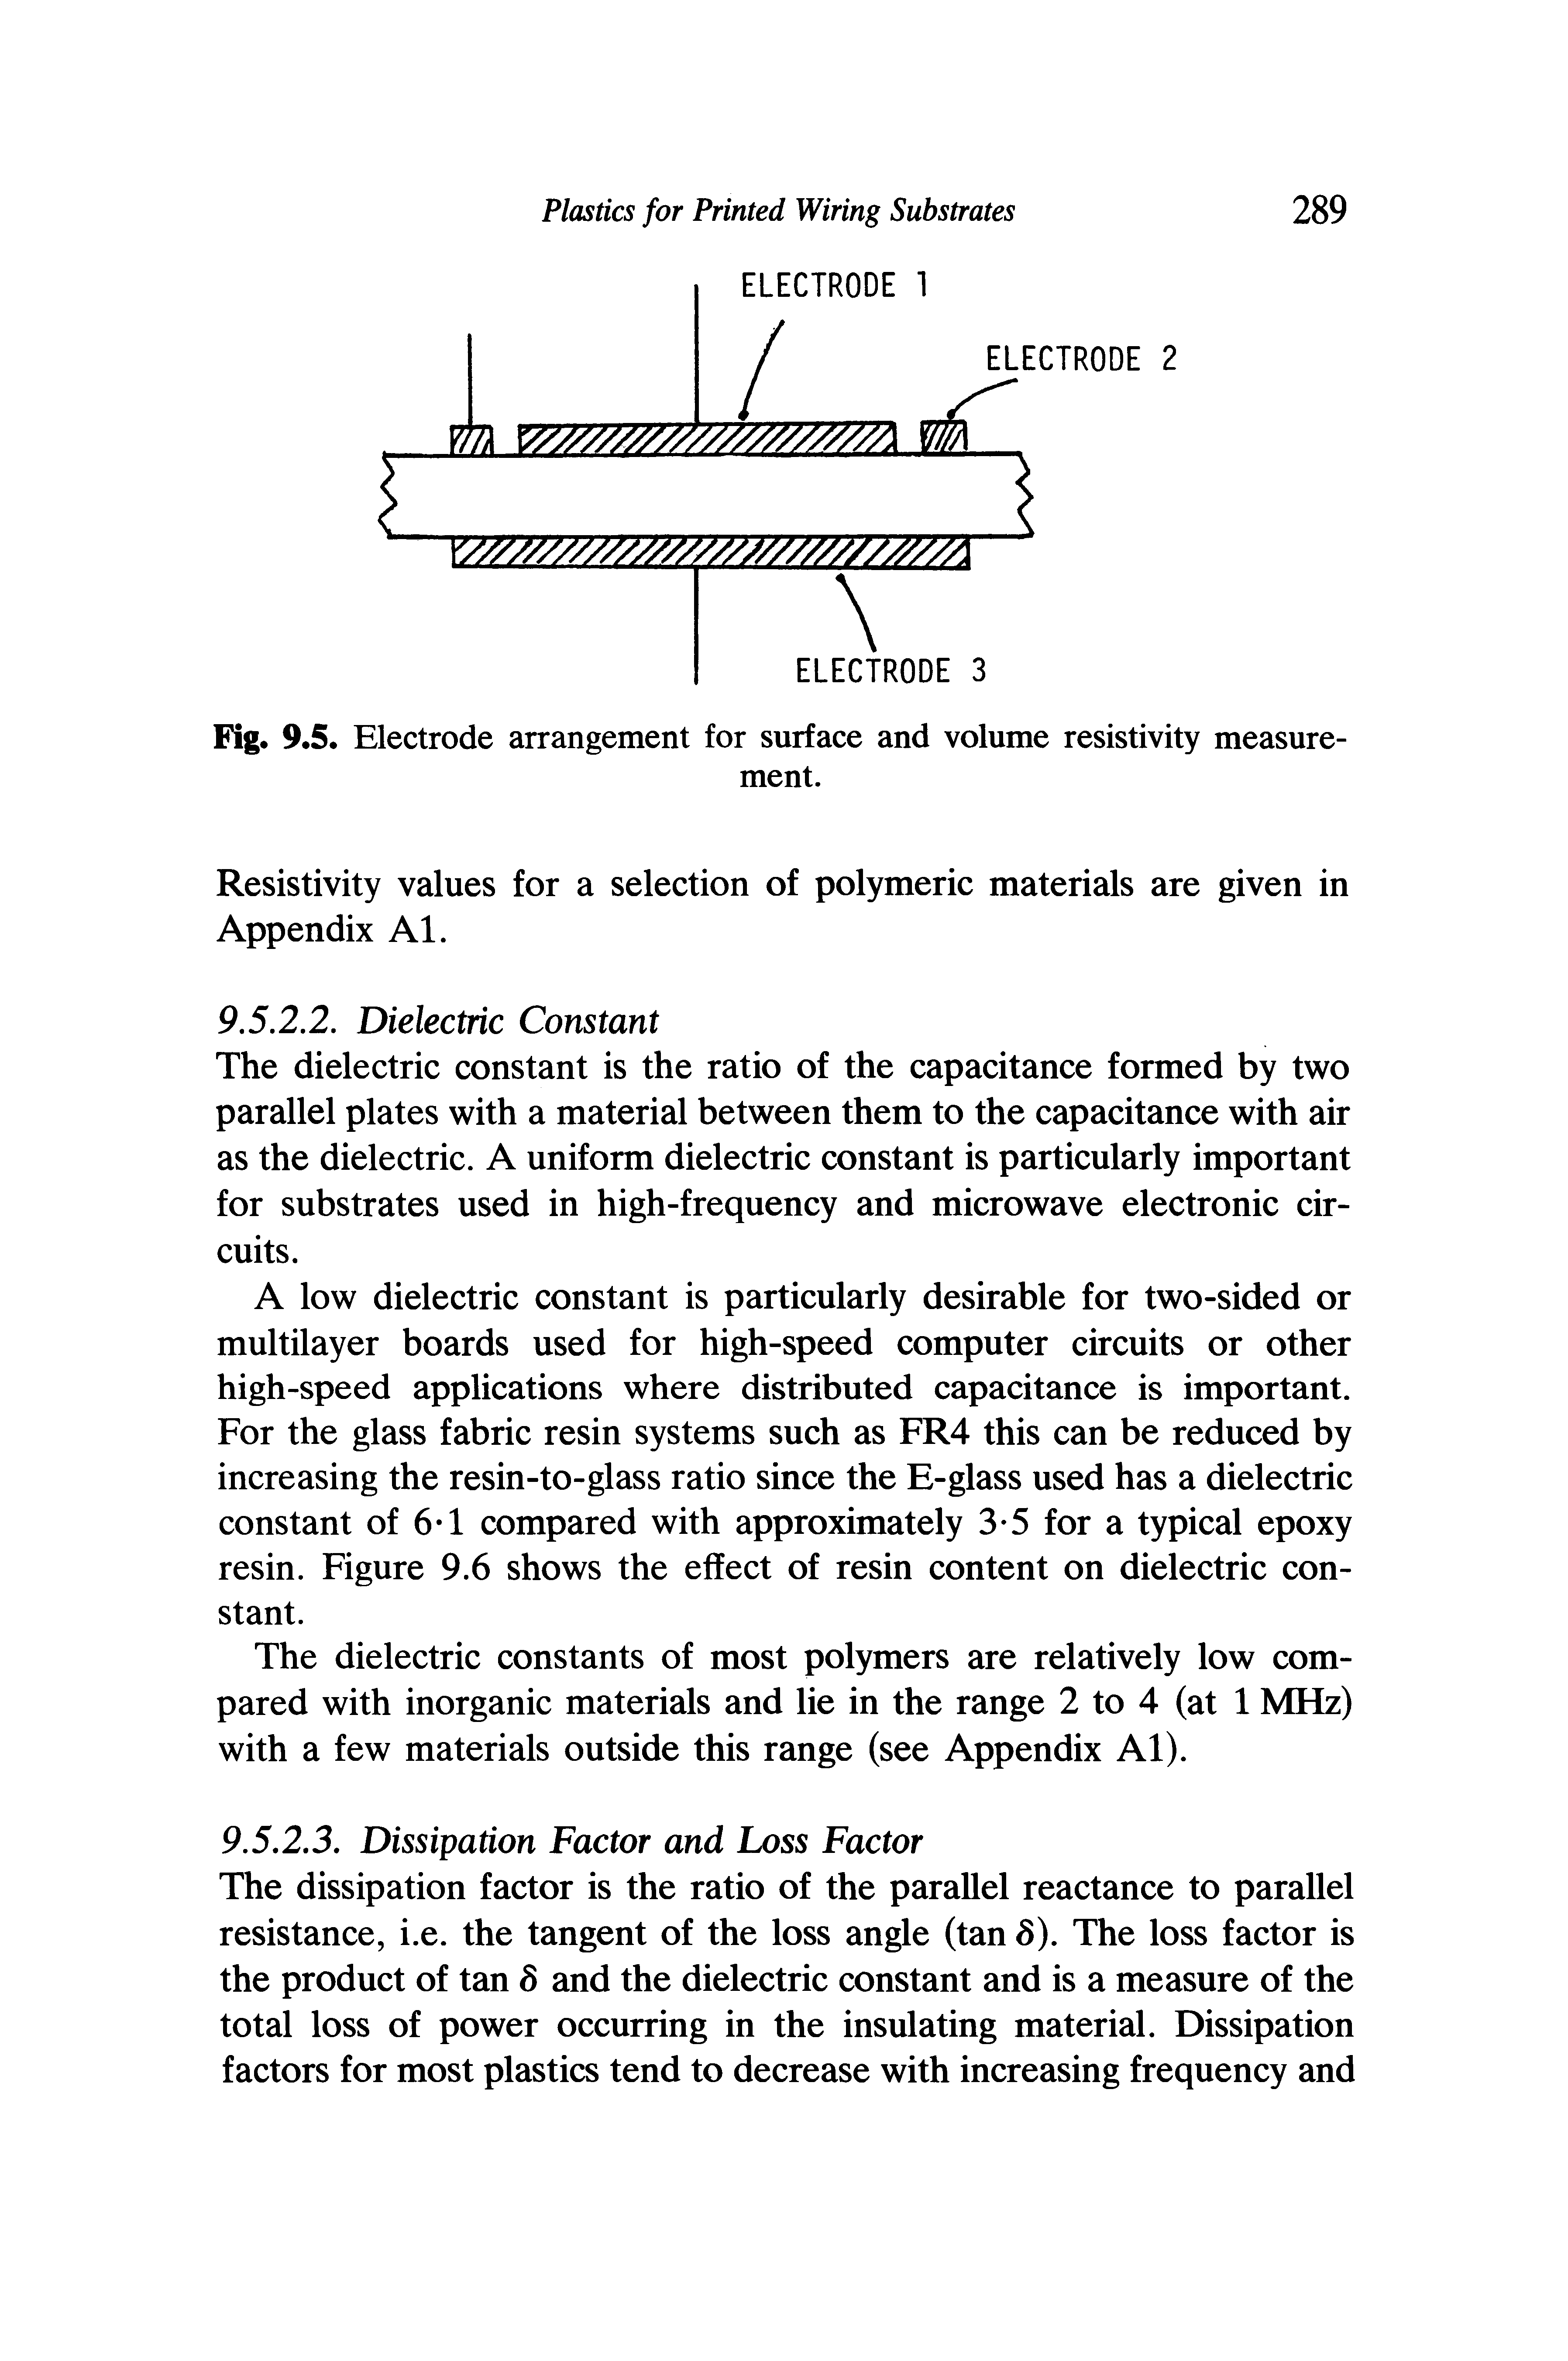 Fig. 9.5. Electrode arrangement for surface and volume resistivity measurement.